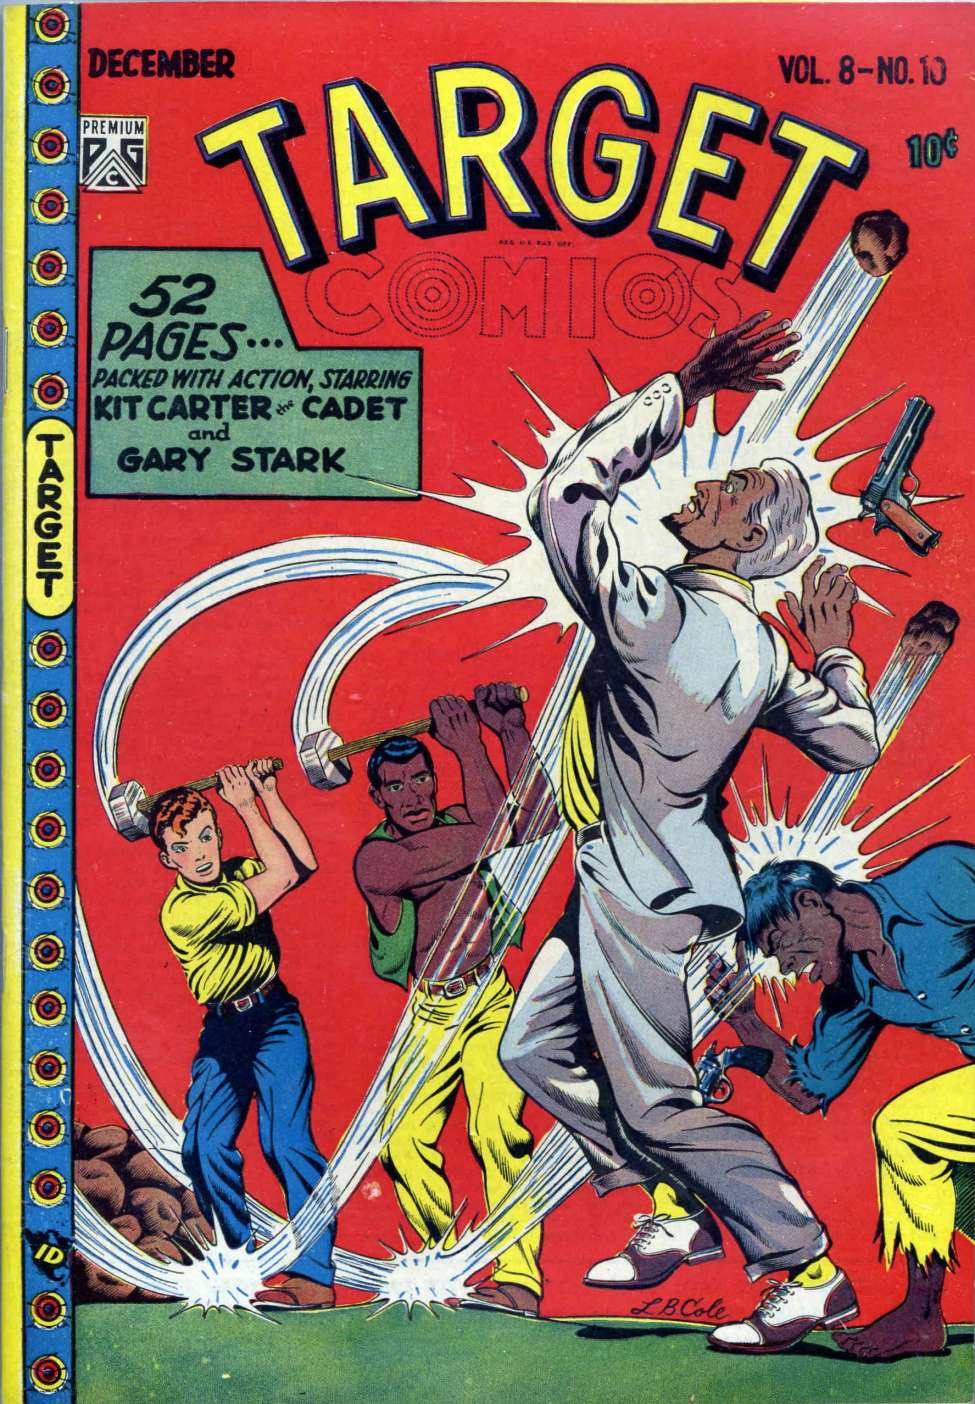 Comic Book Cover For Target Comics v8 10